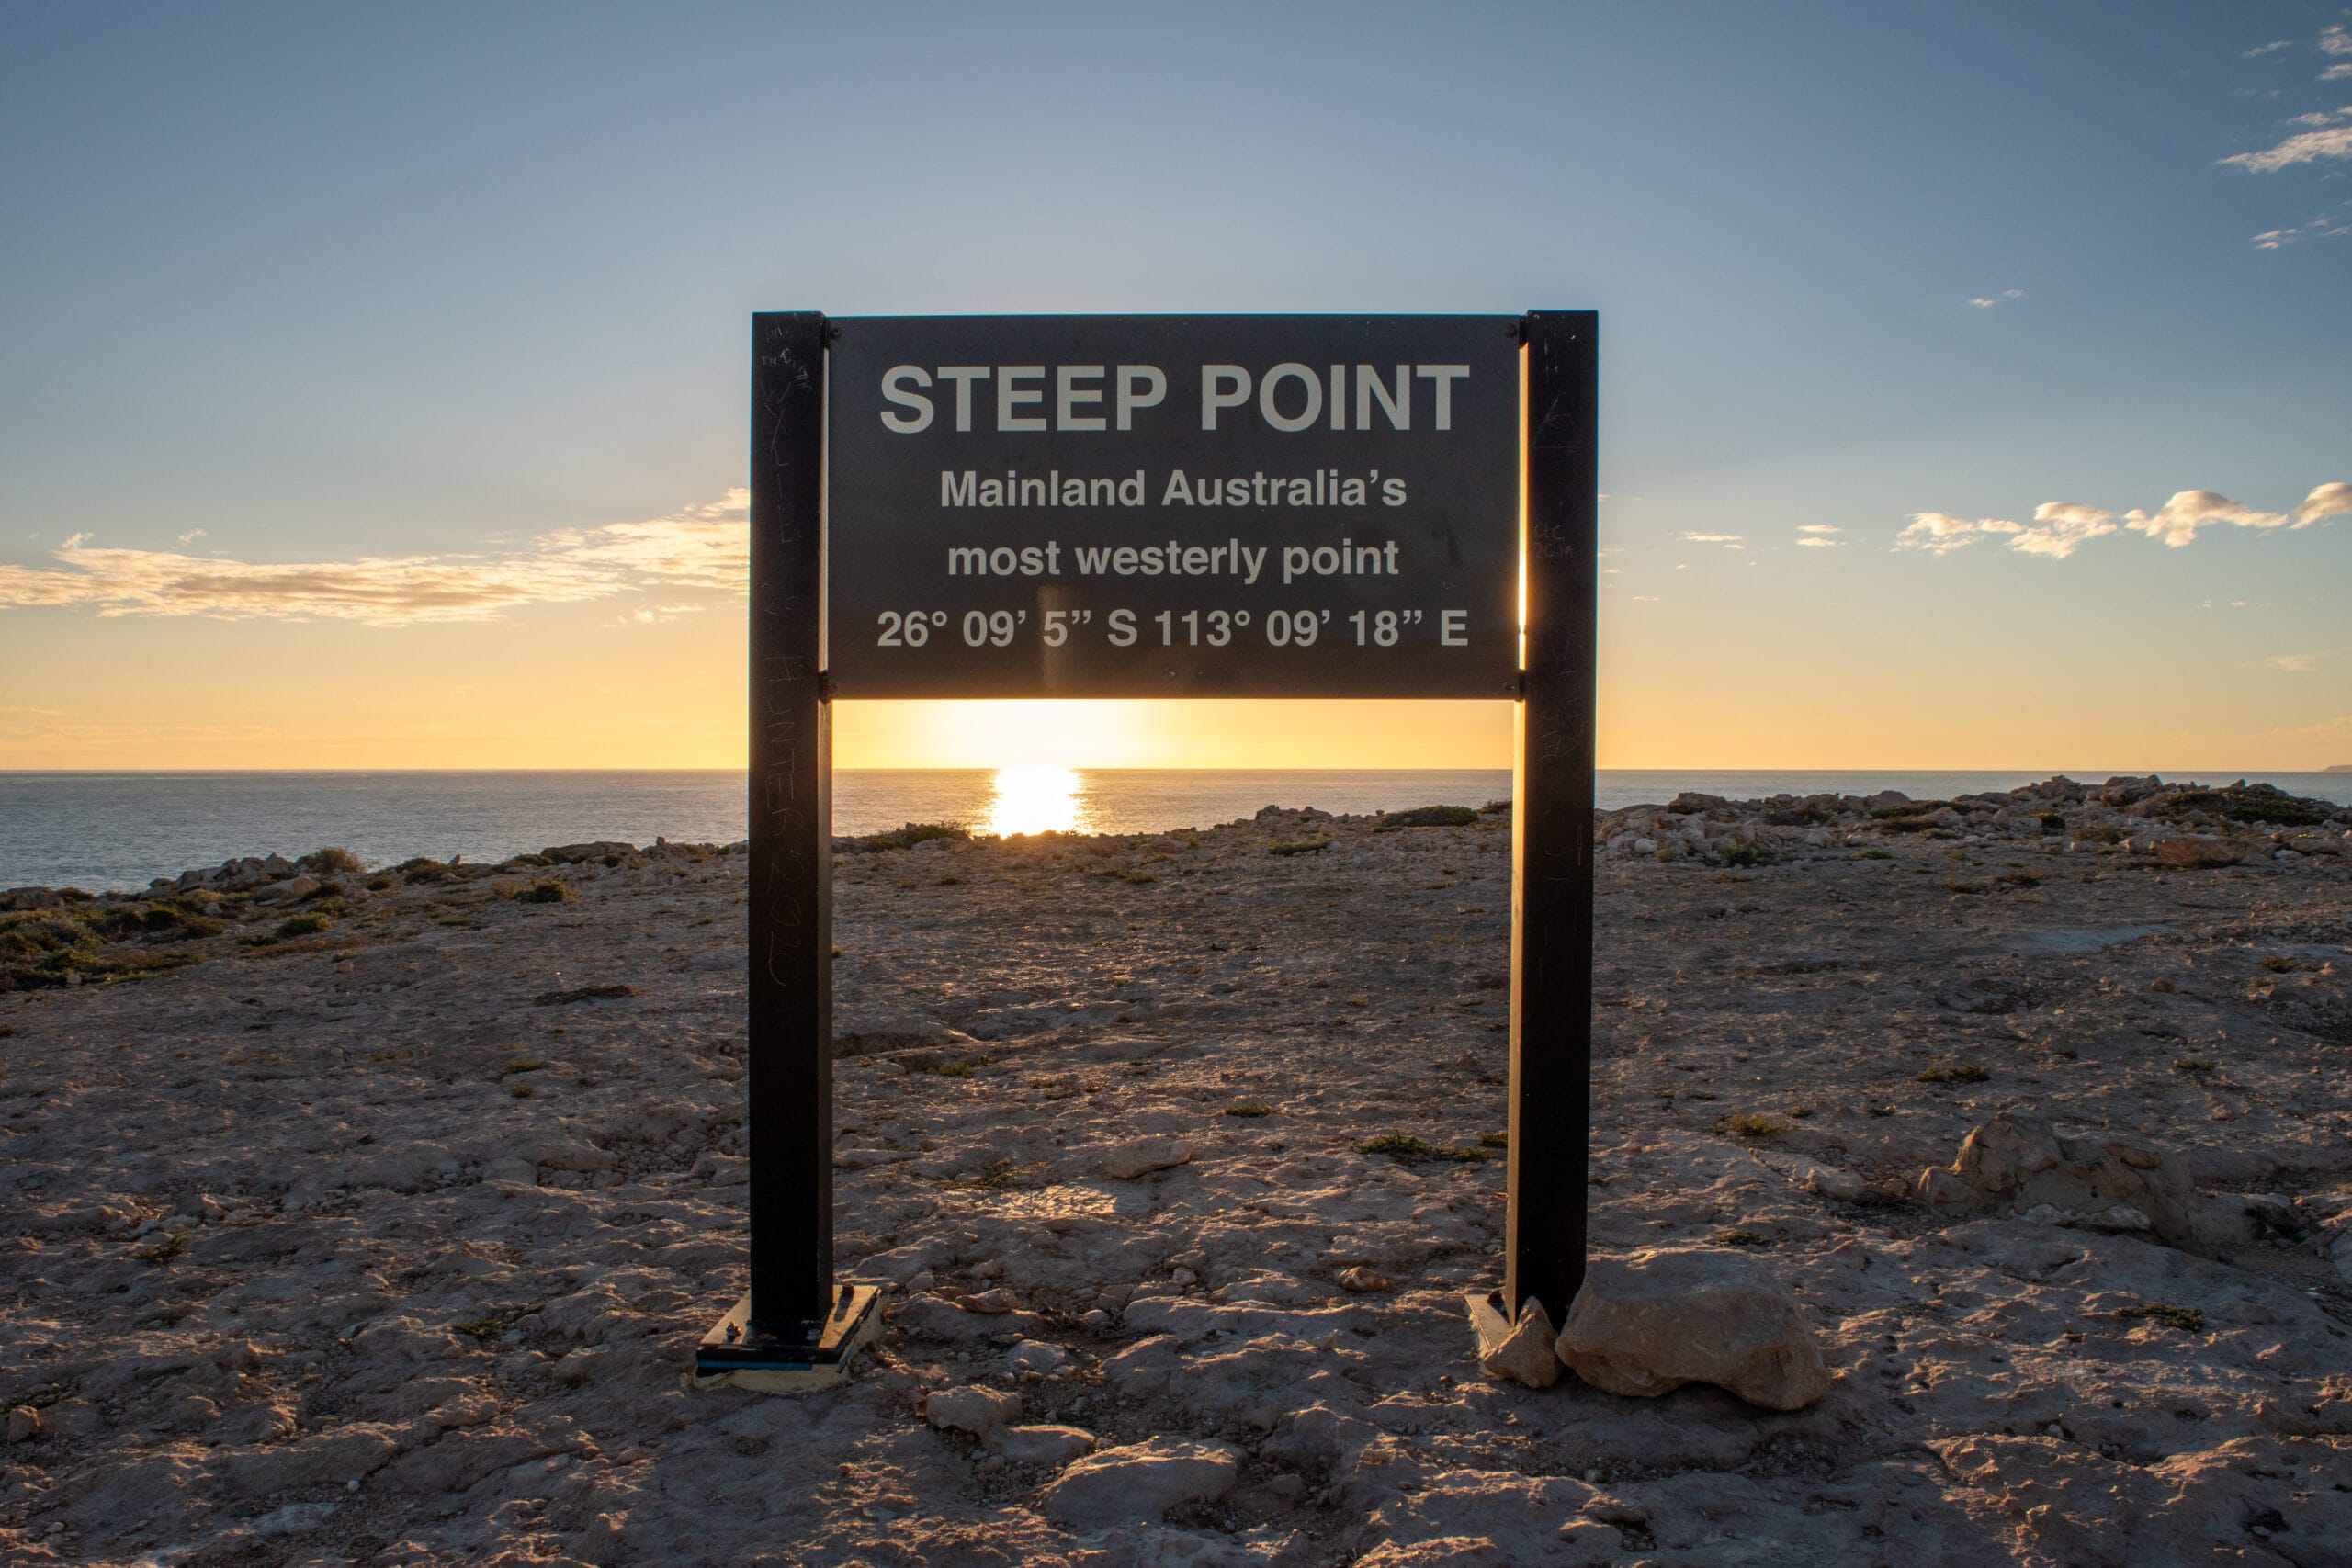 Shark Bay: Steep Point and Francois Peron National Park